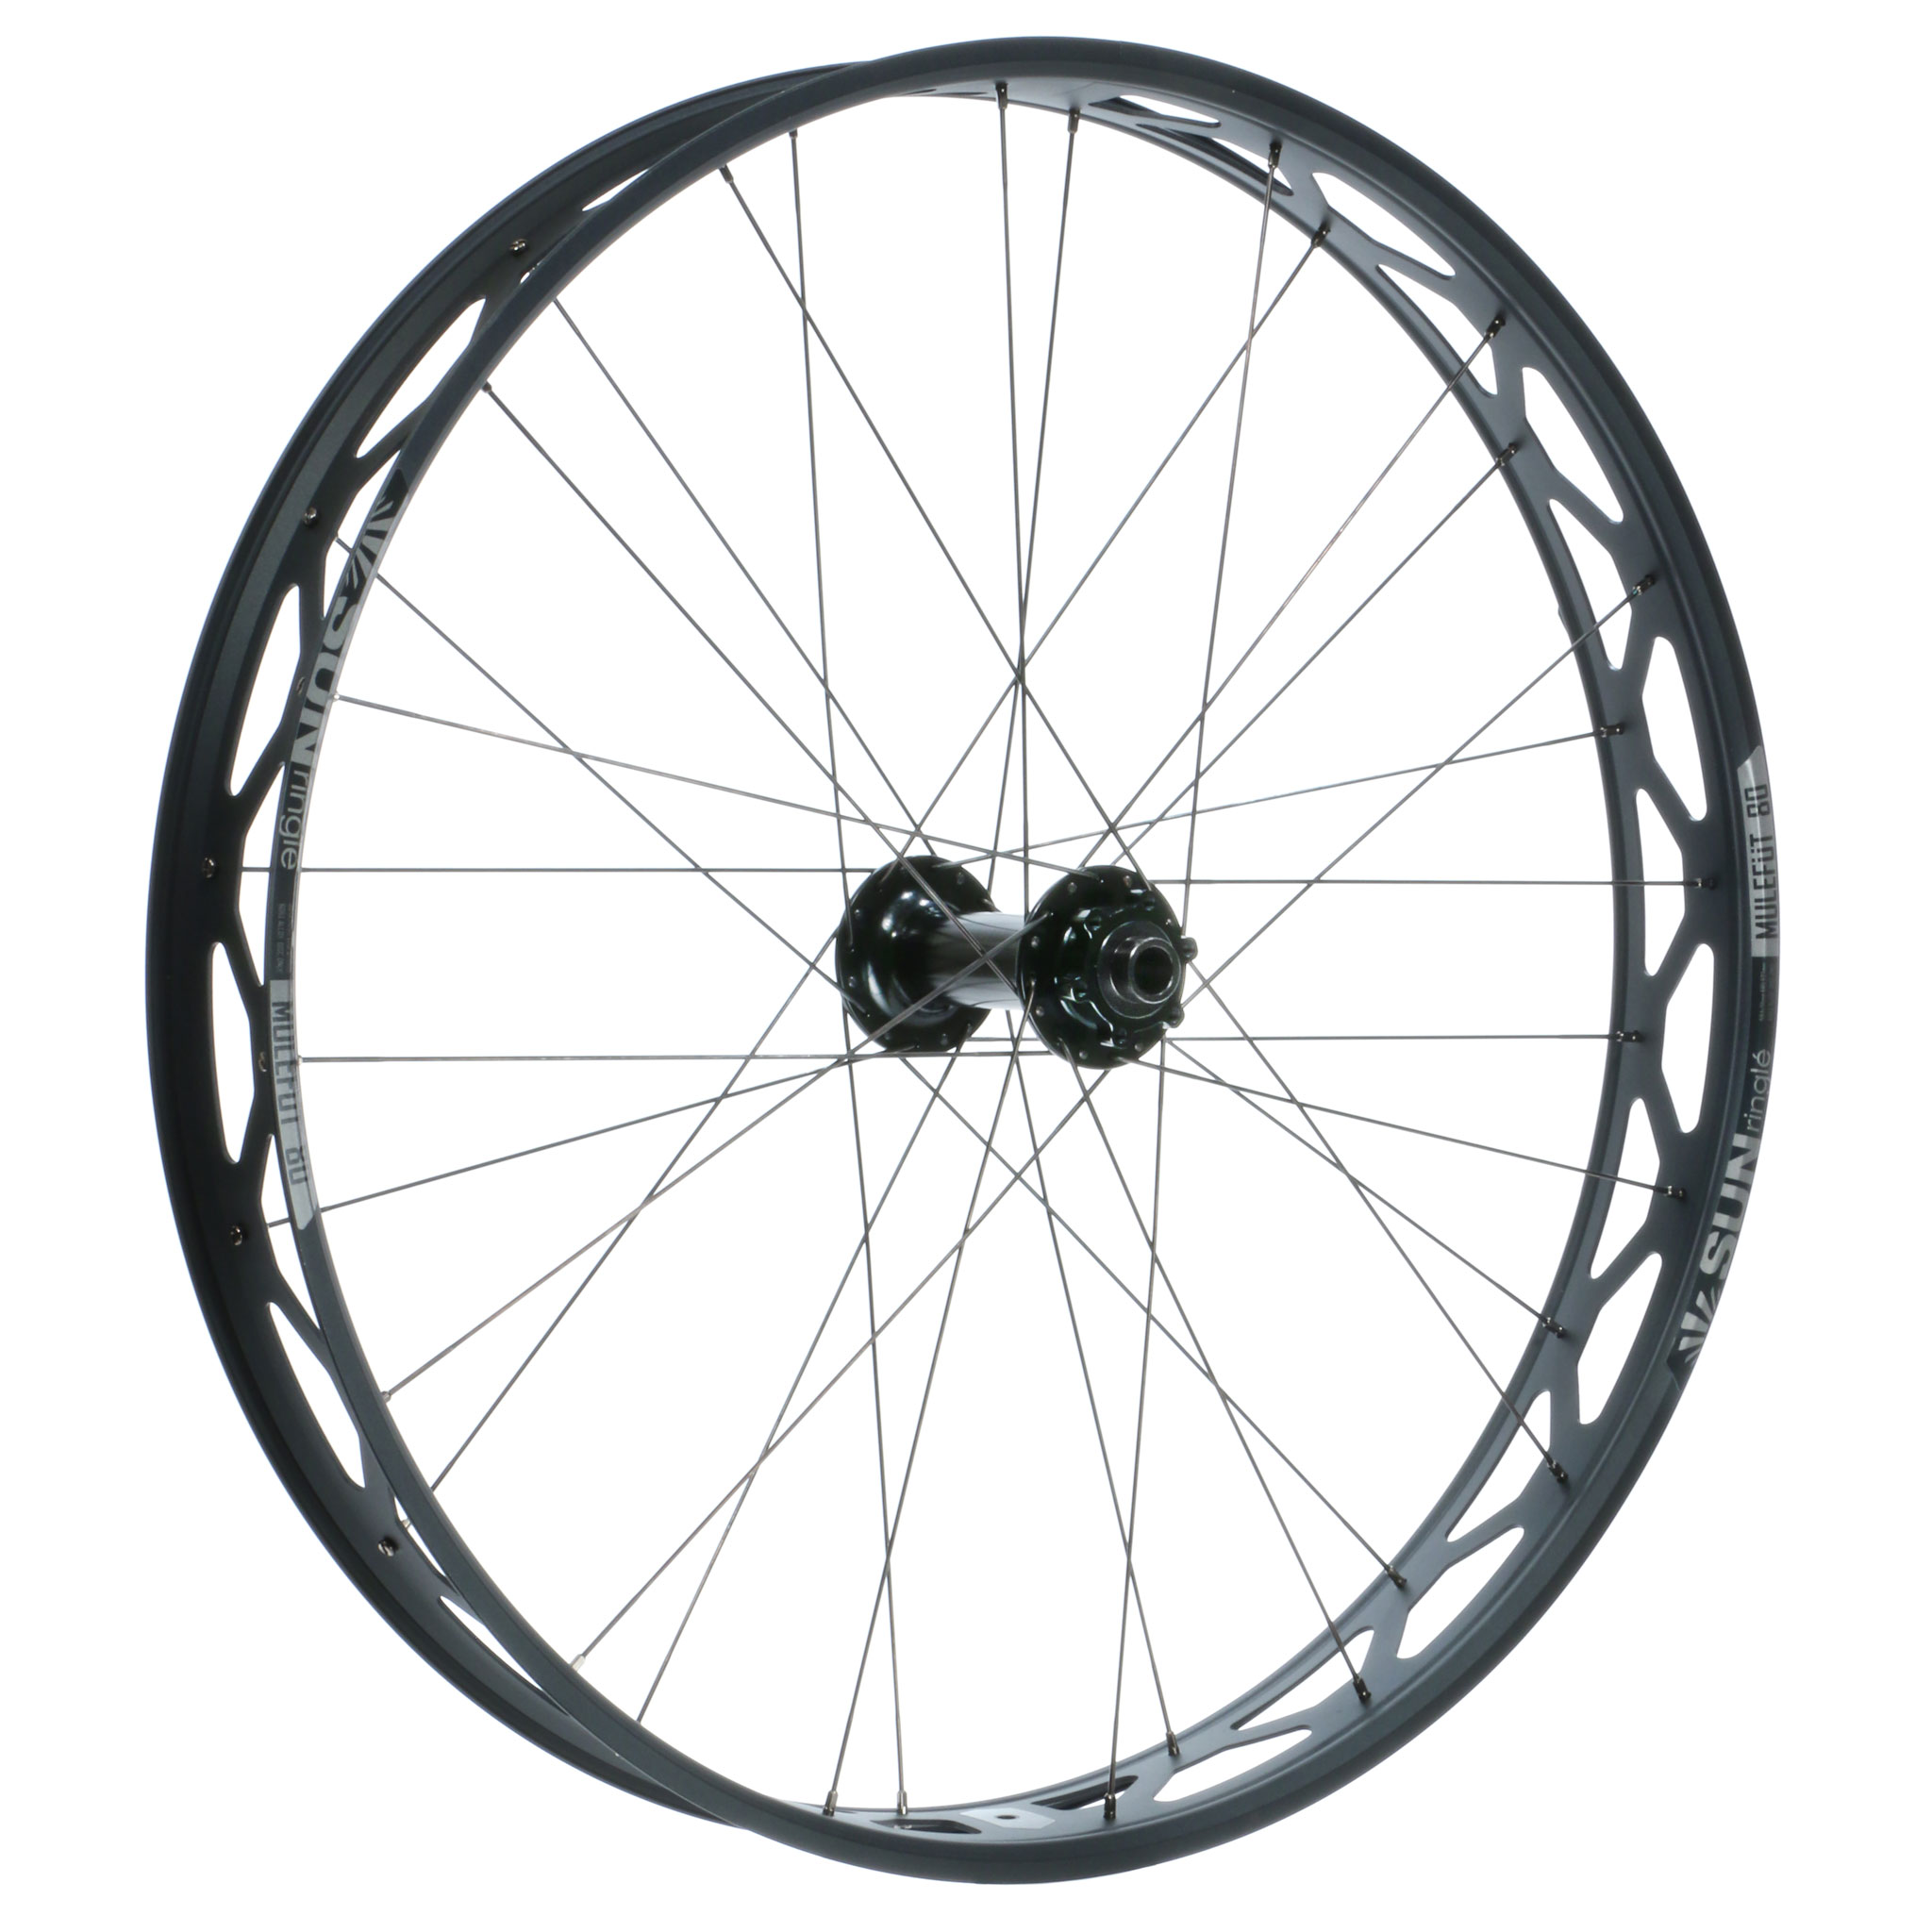 SunRingle Mulefut 80 26" FatBike Front Wheel,15x150mm, Black